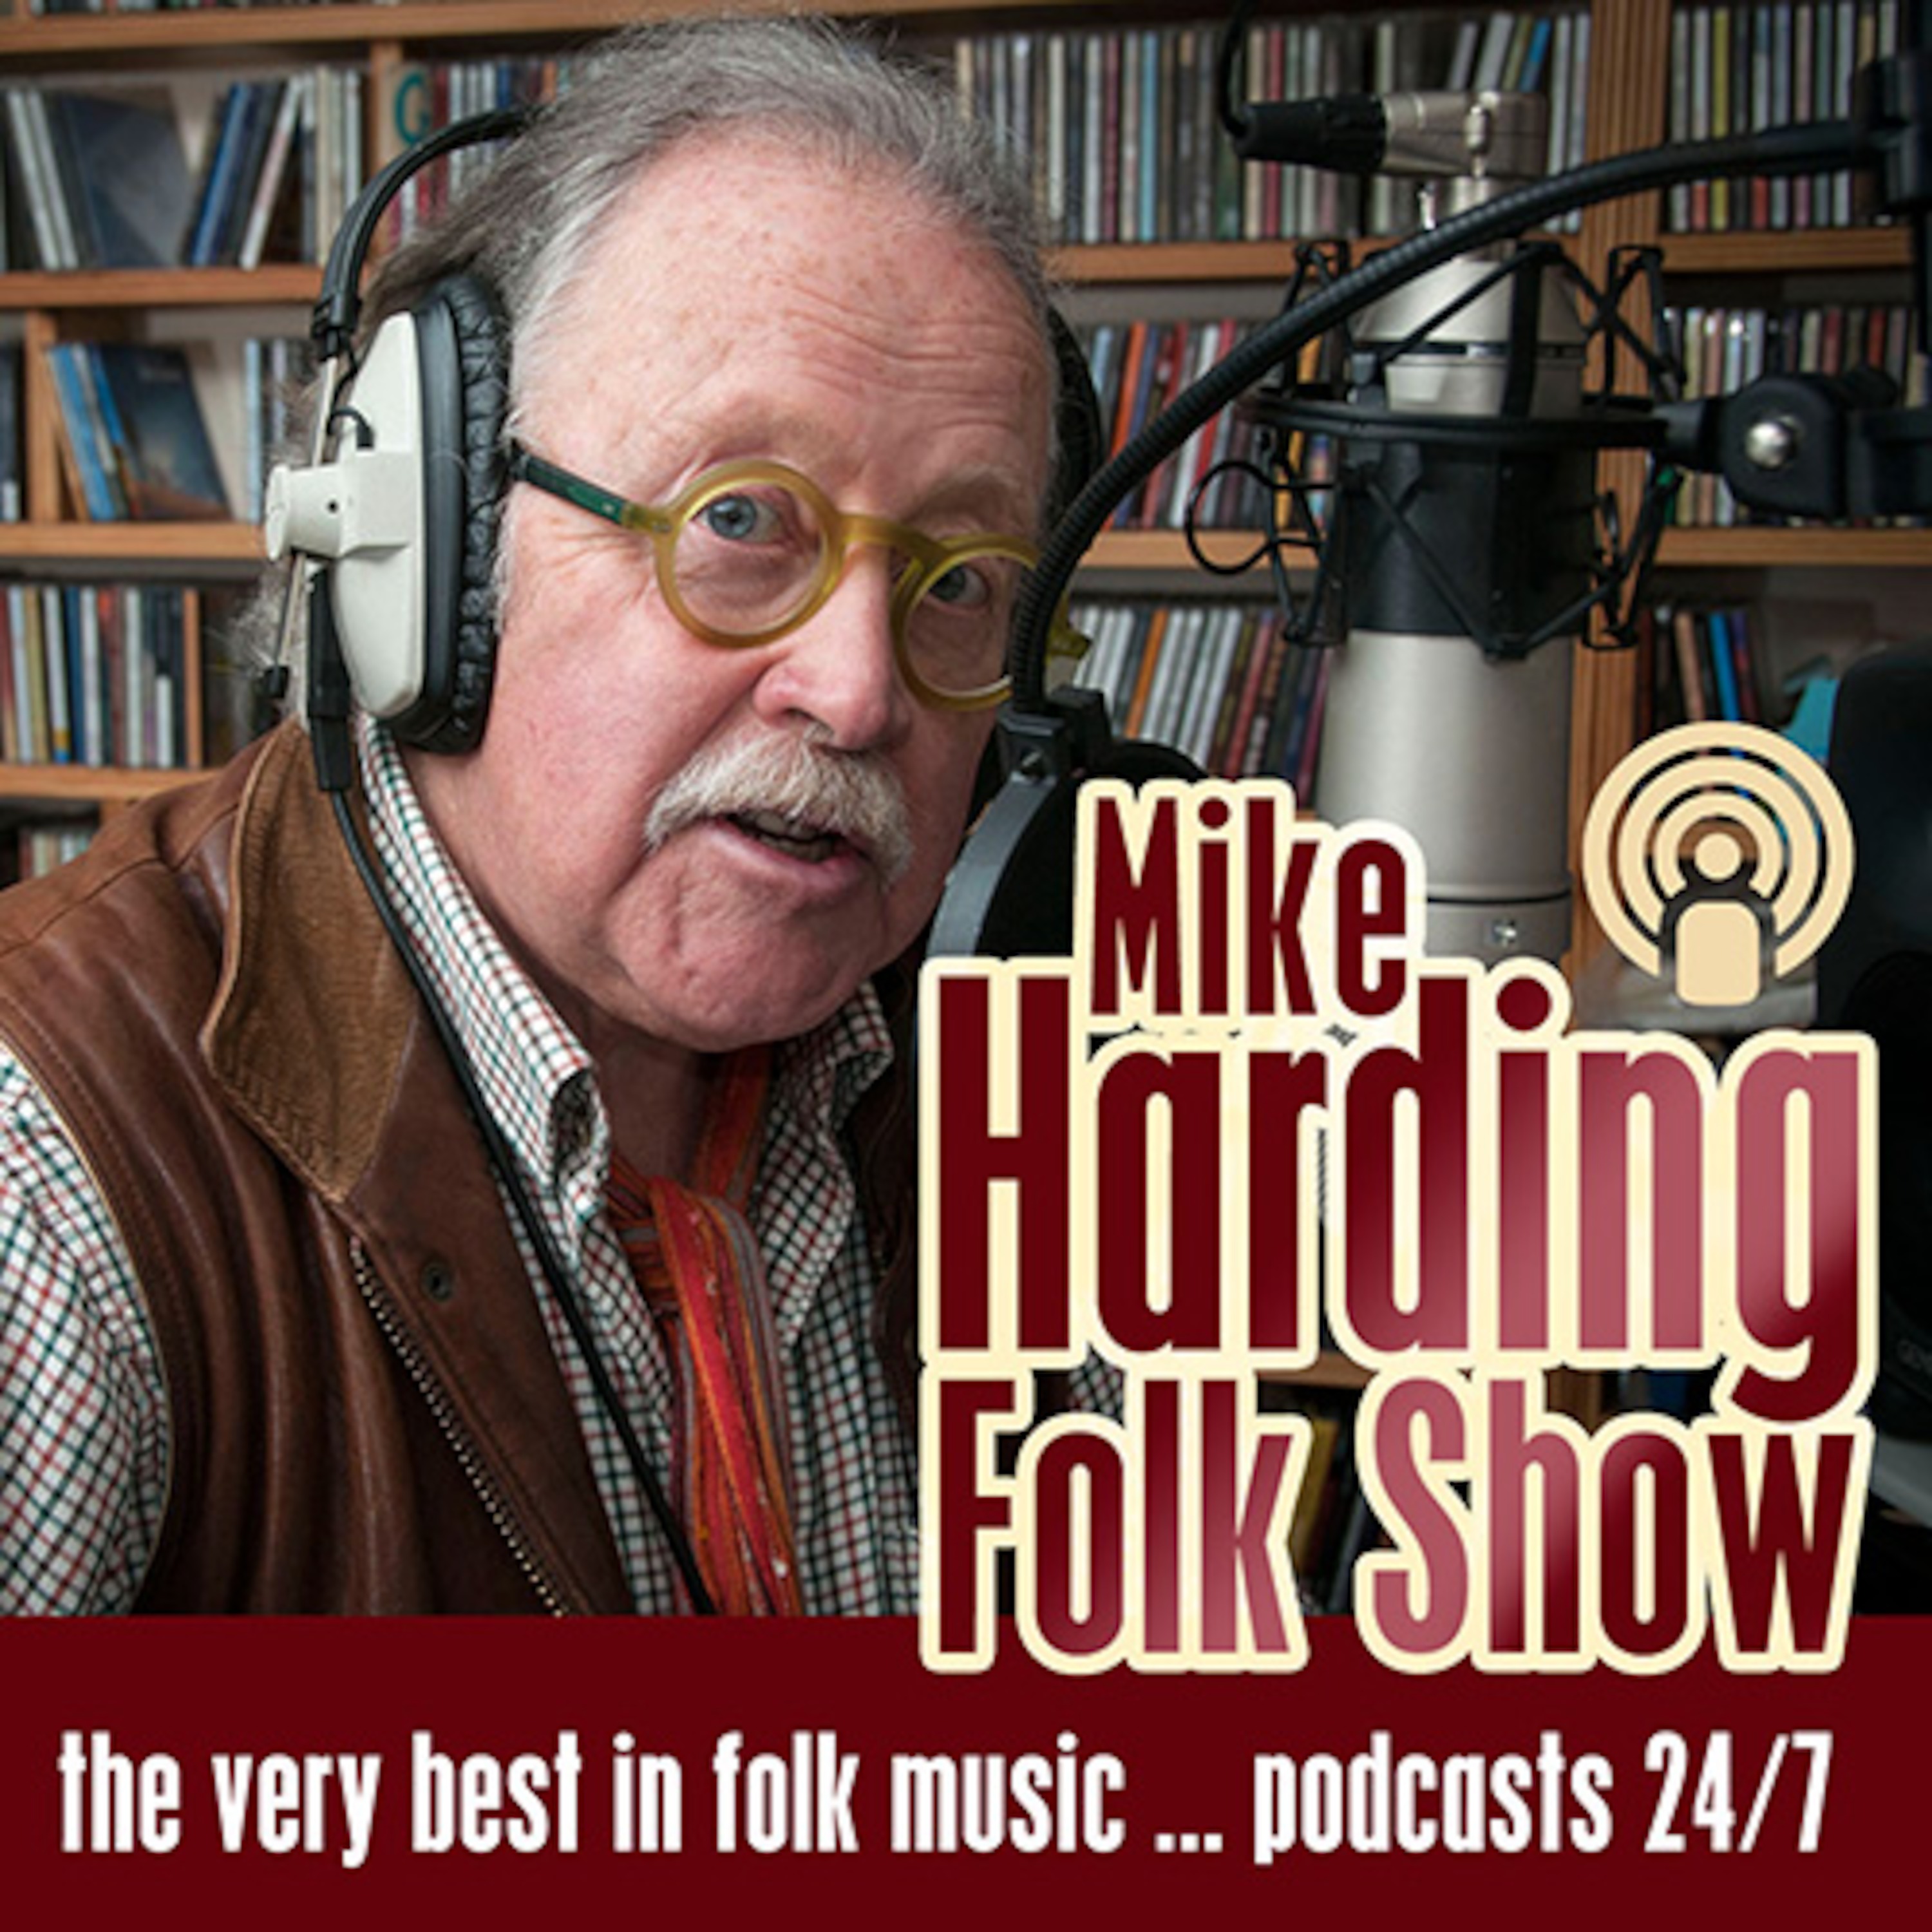 Mike Harding Folk Show 28